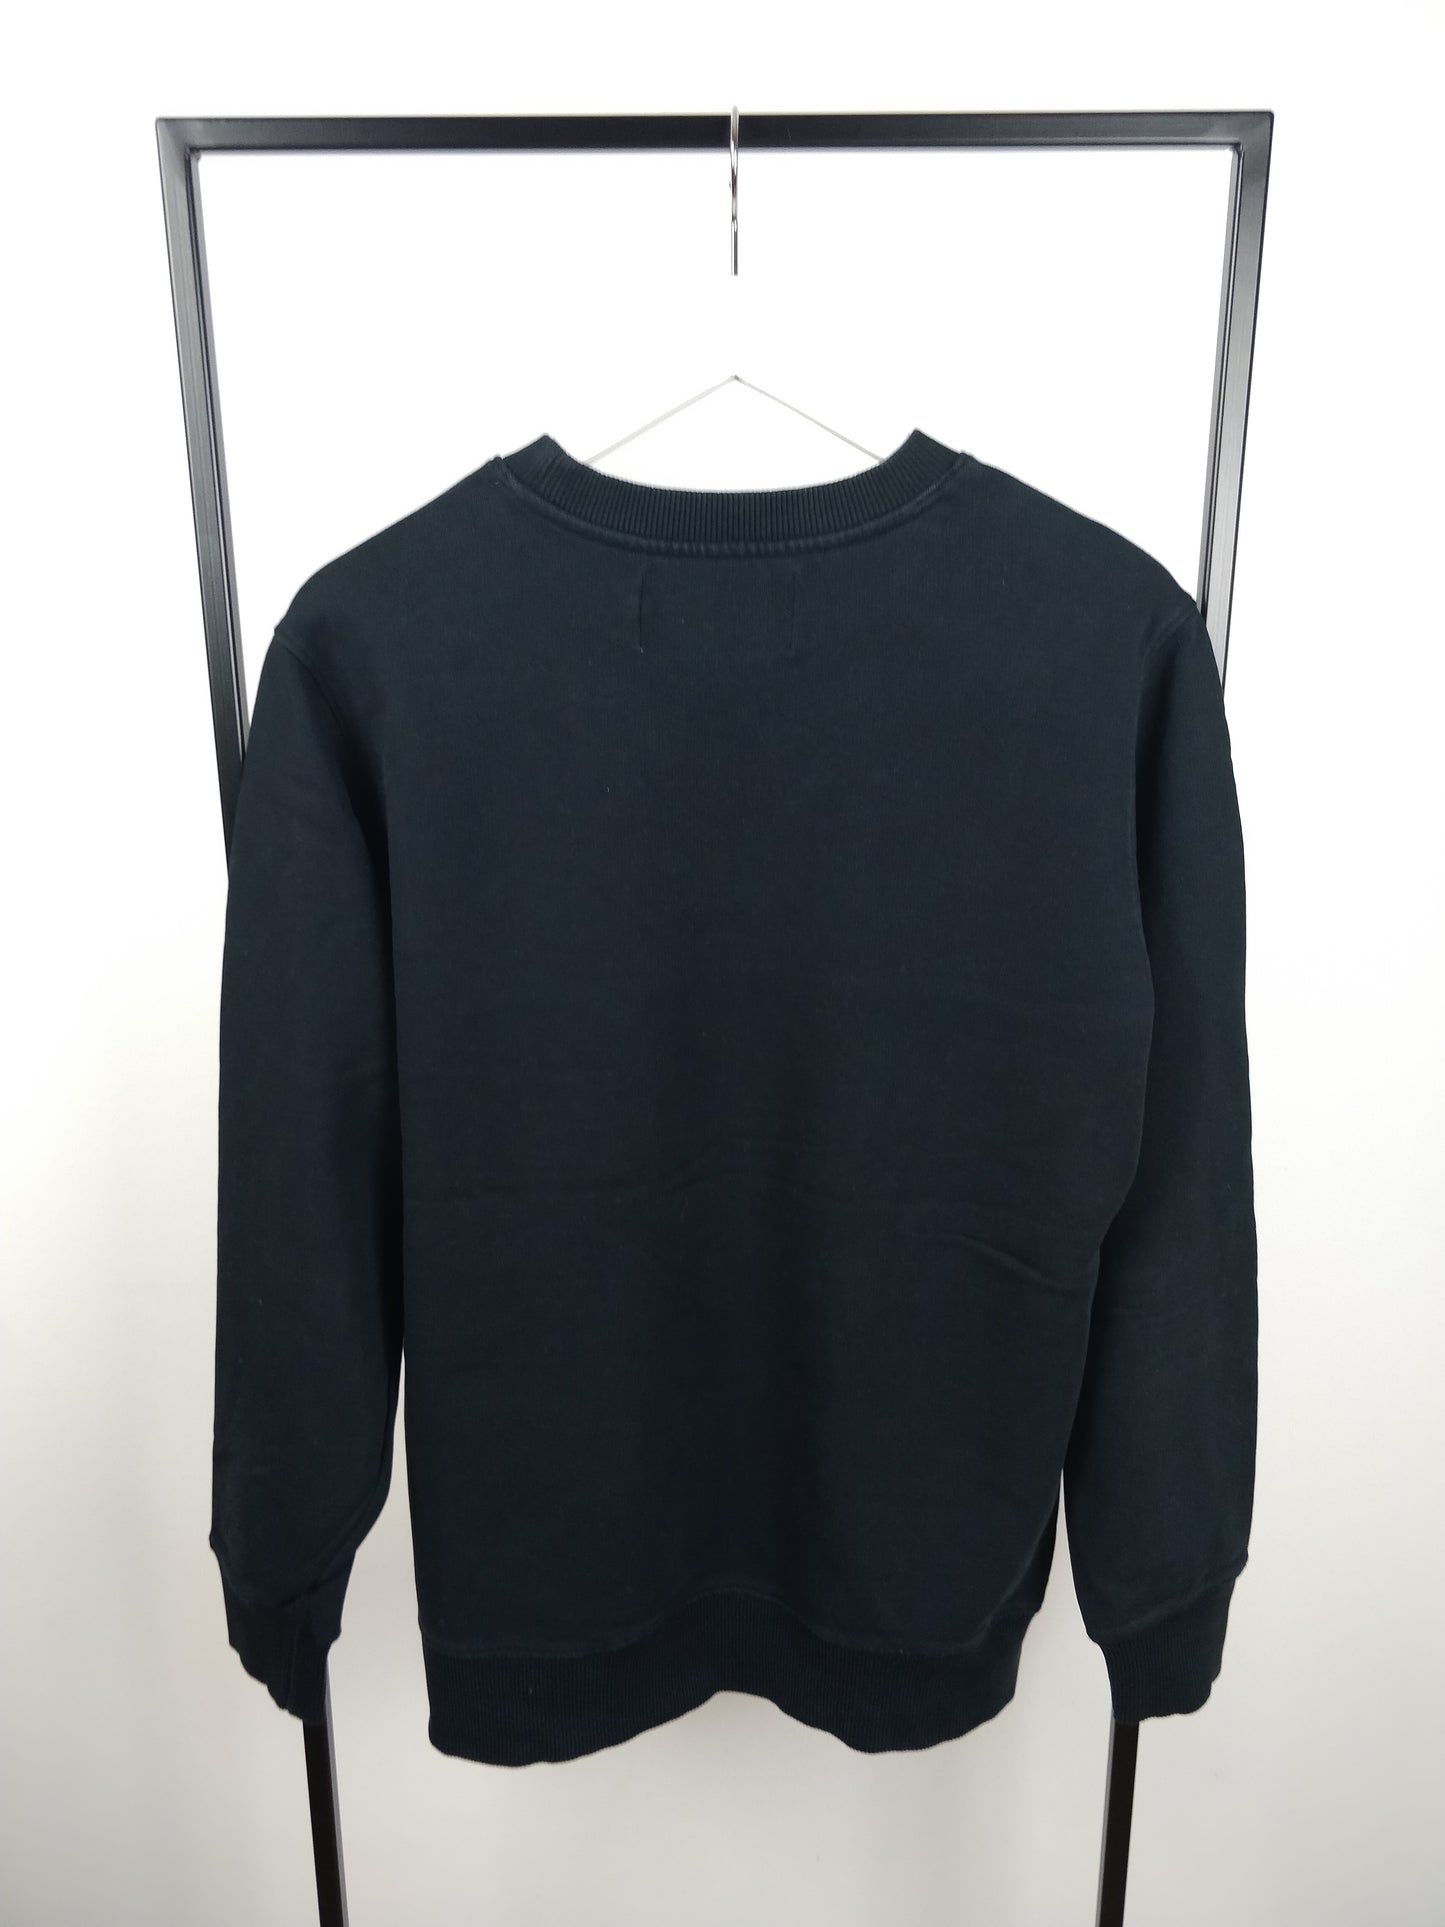 CKJ Sweater